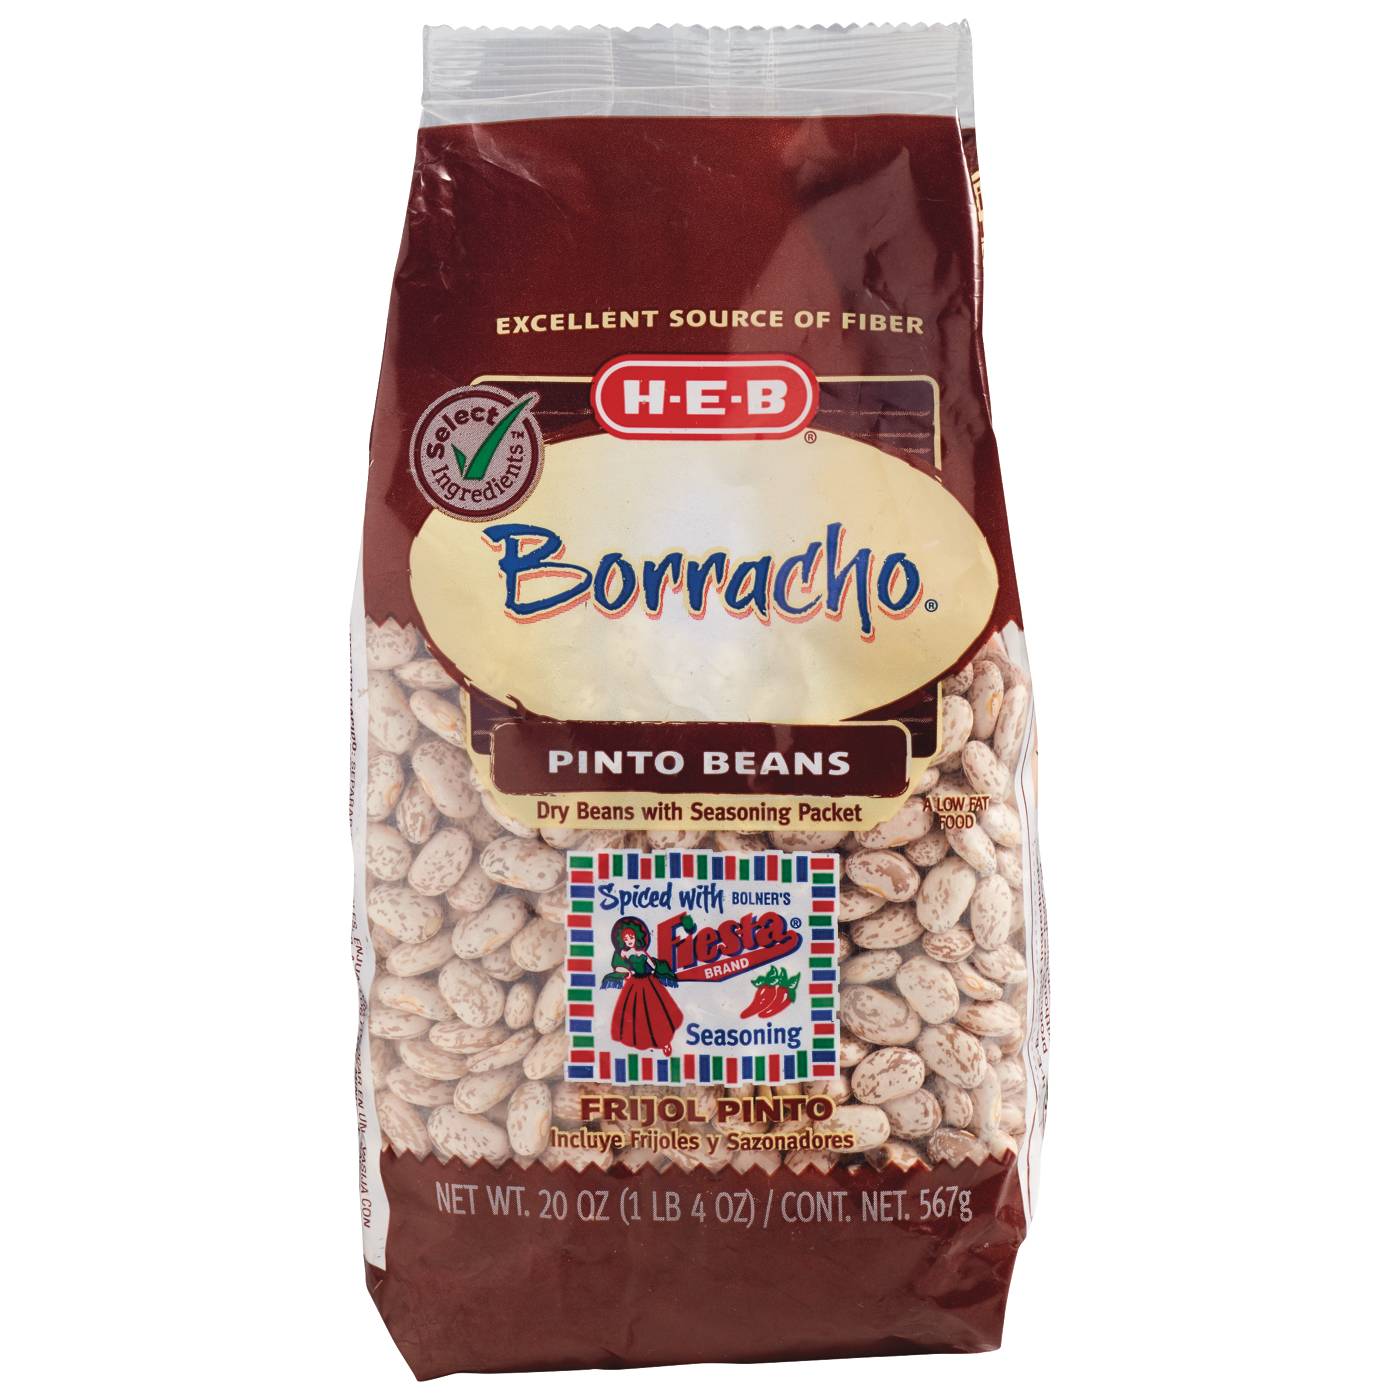 H-E-B Borracho Pinto Beans; image 1 of 2